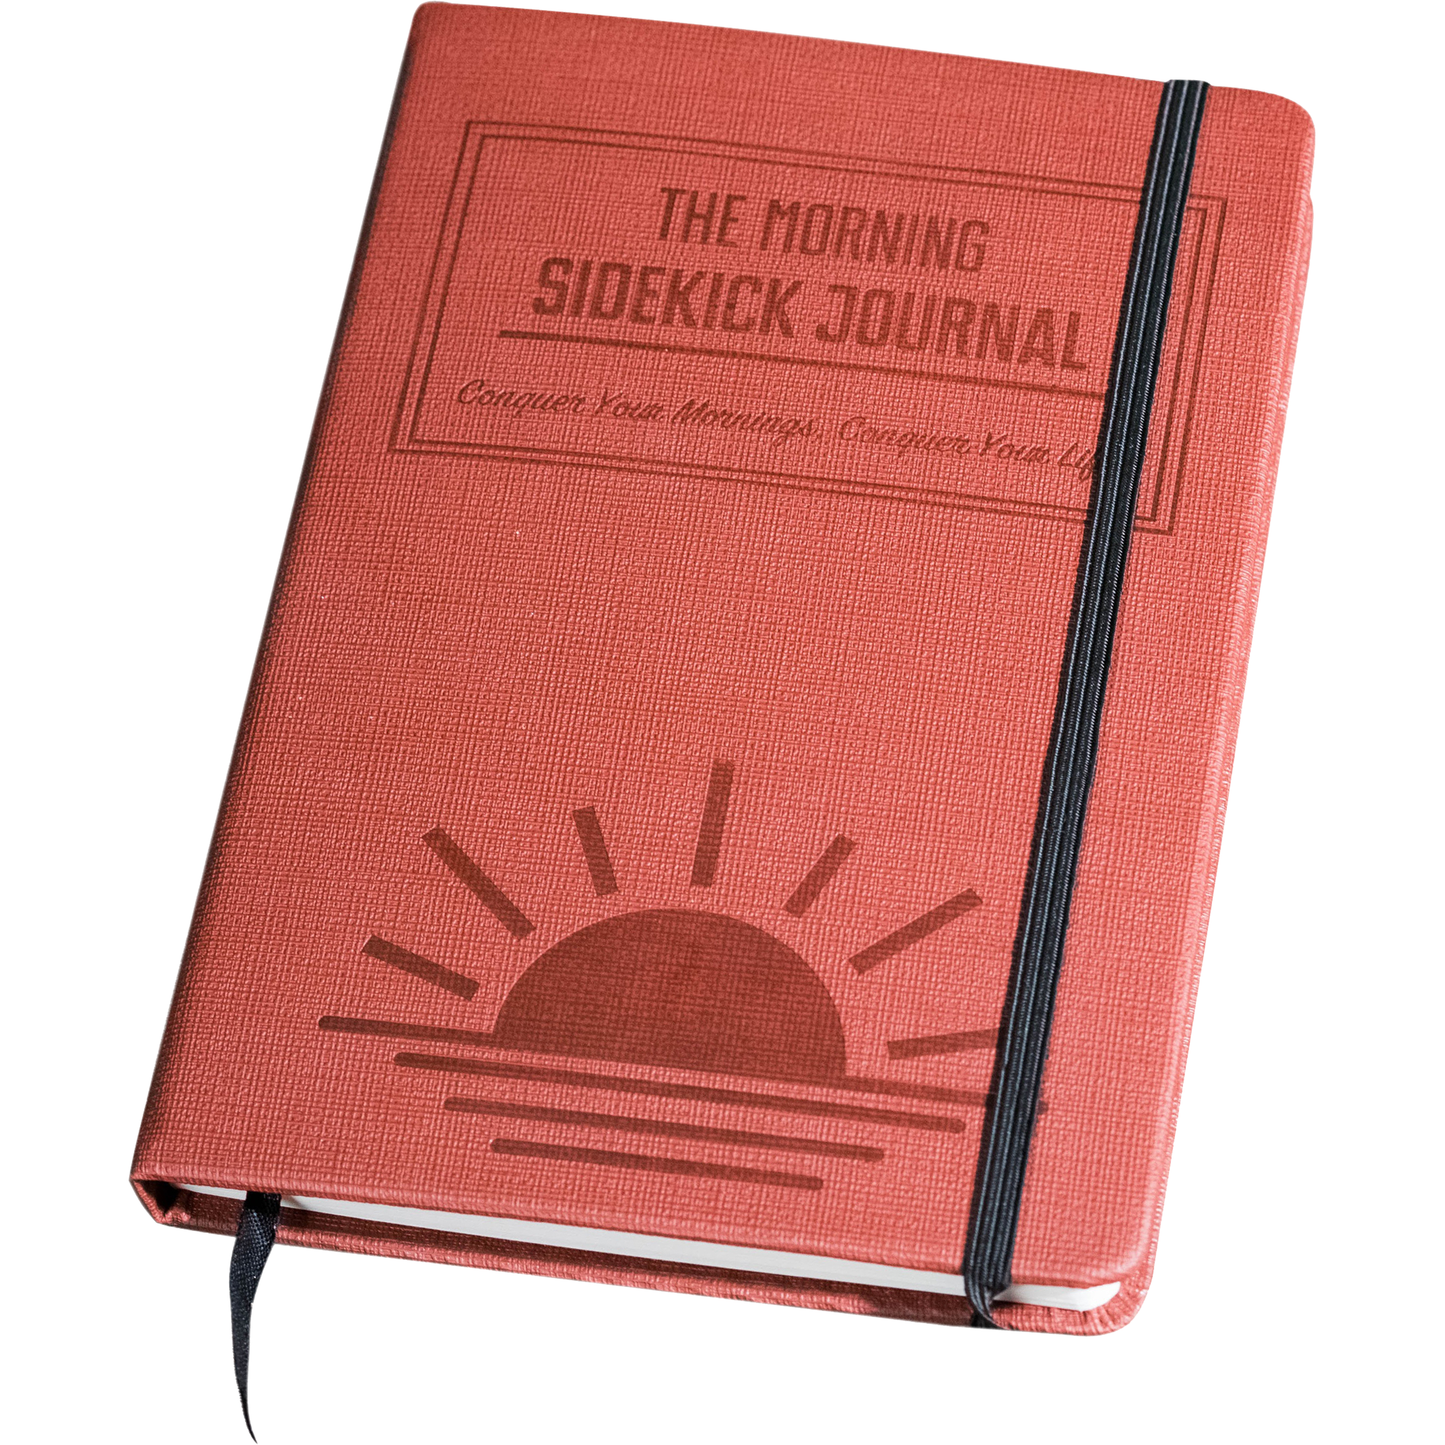 Morning Sidekick Journal (Volume 1)